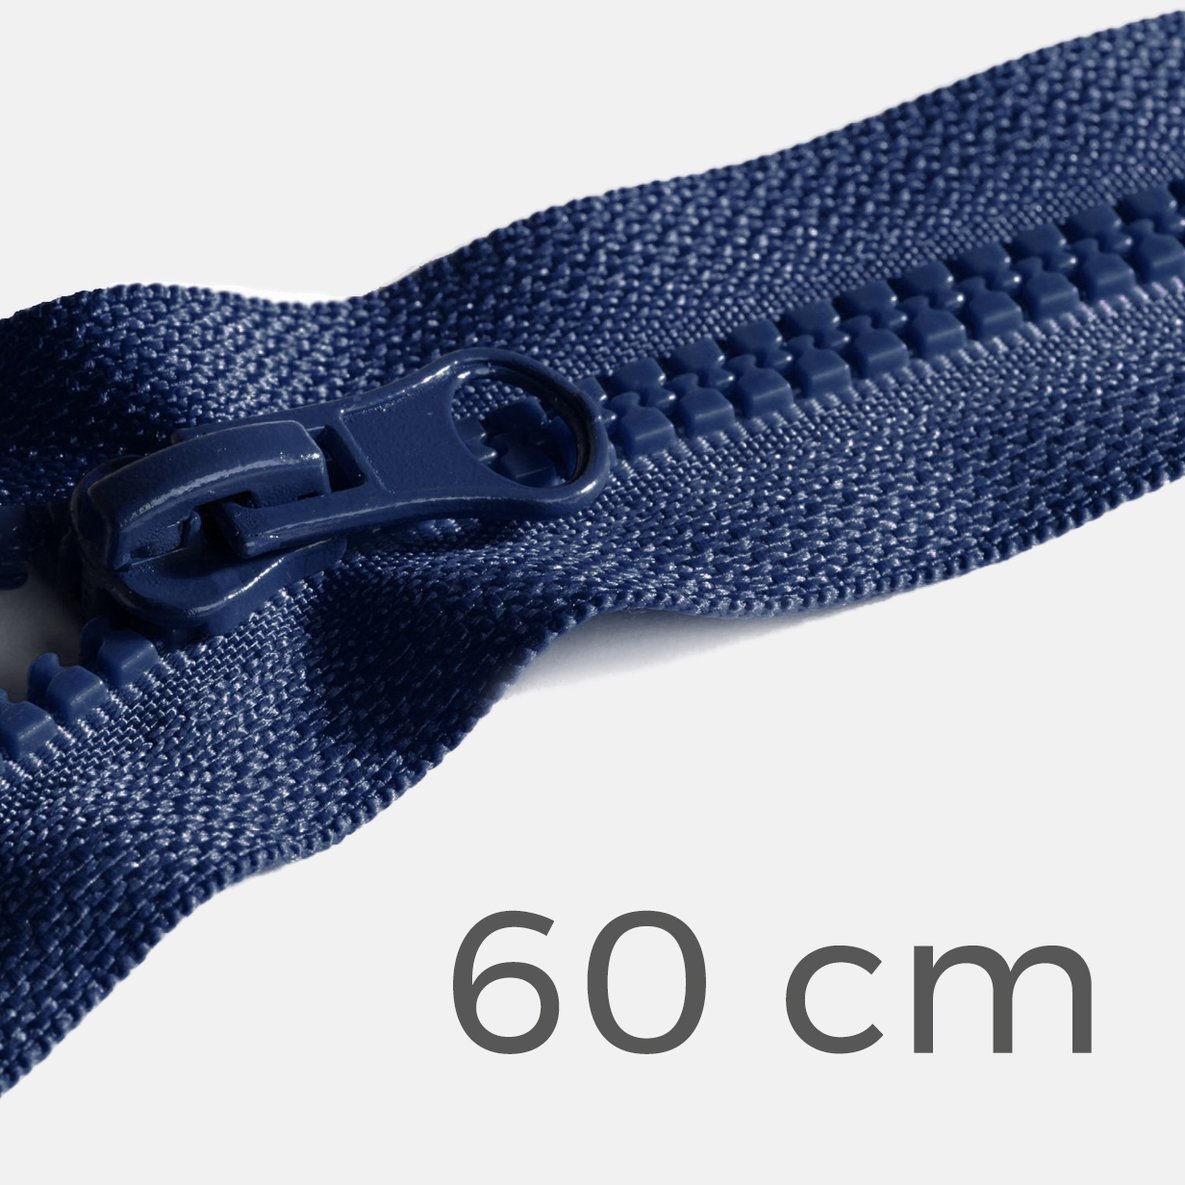 Jacken-Reißverschluss teilbar 60 cm, marineblau